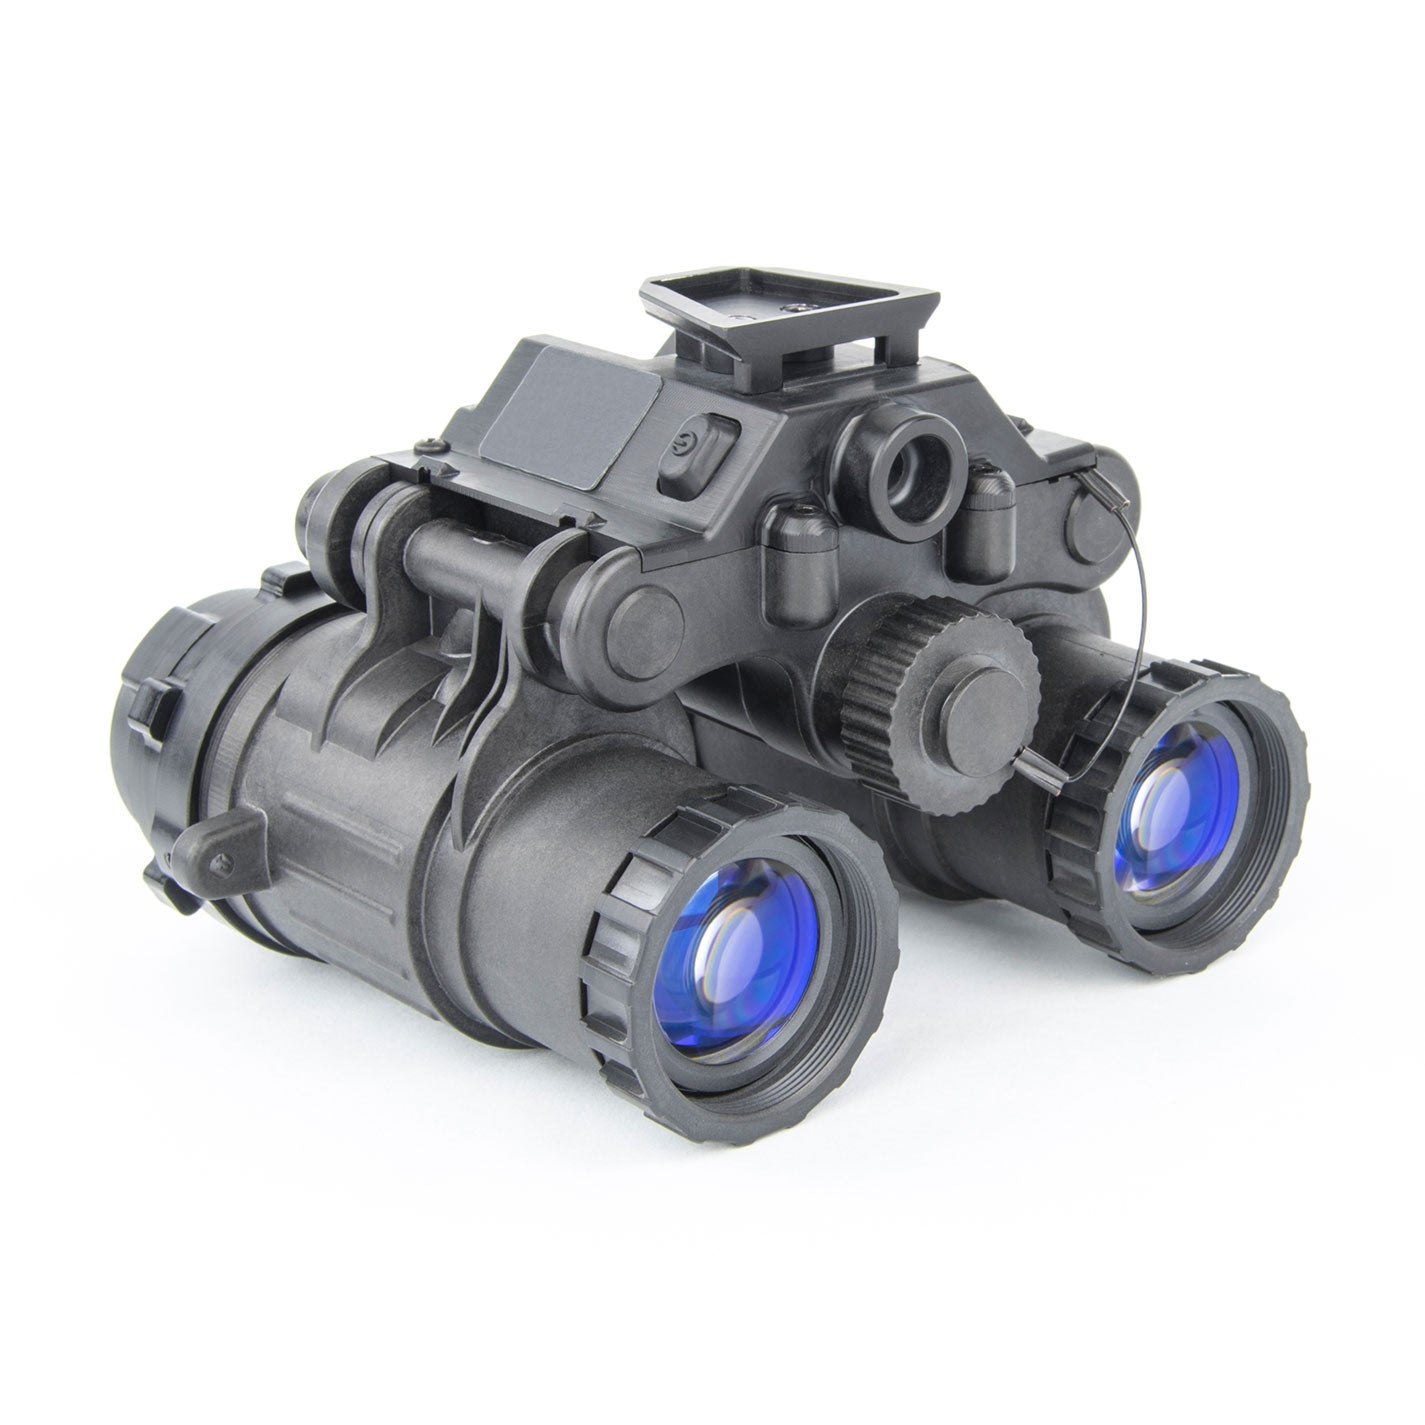 NVD MINI B AA BNVD Night Vision Binocular